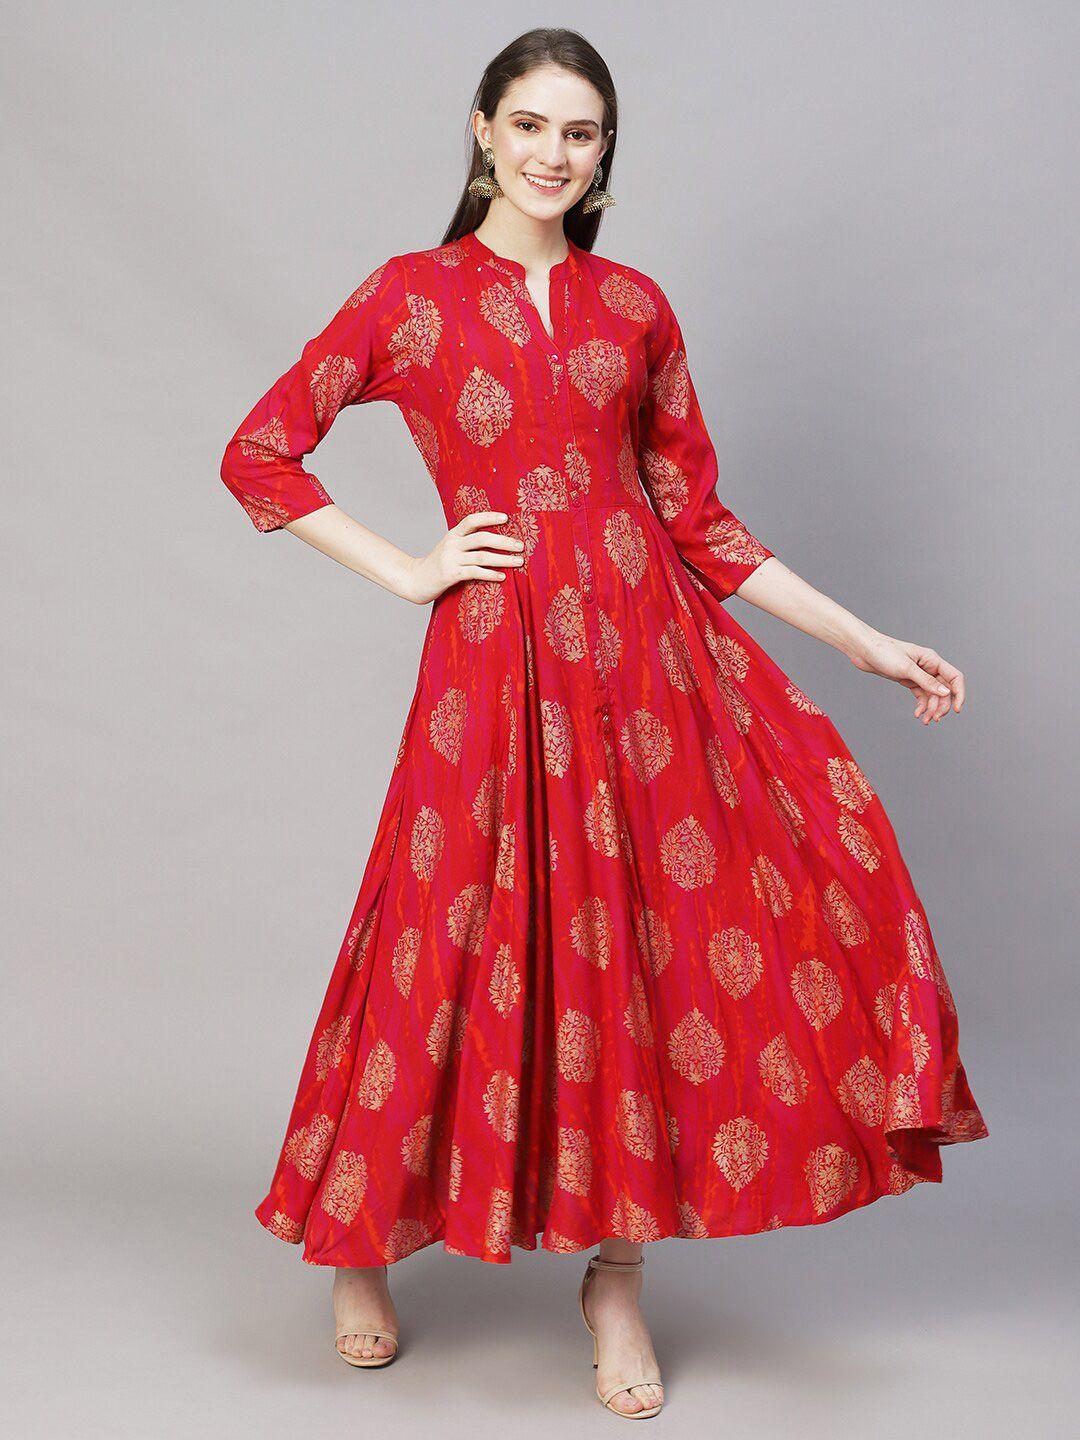 fashor women red ethnic motifs ethnic viscose rayon a-line maxi dress